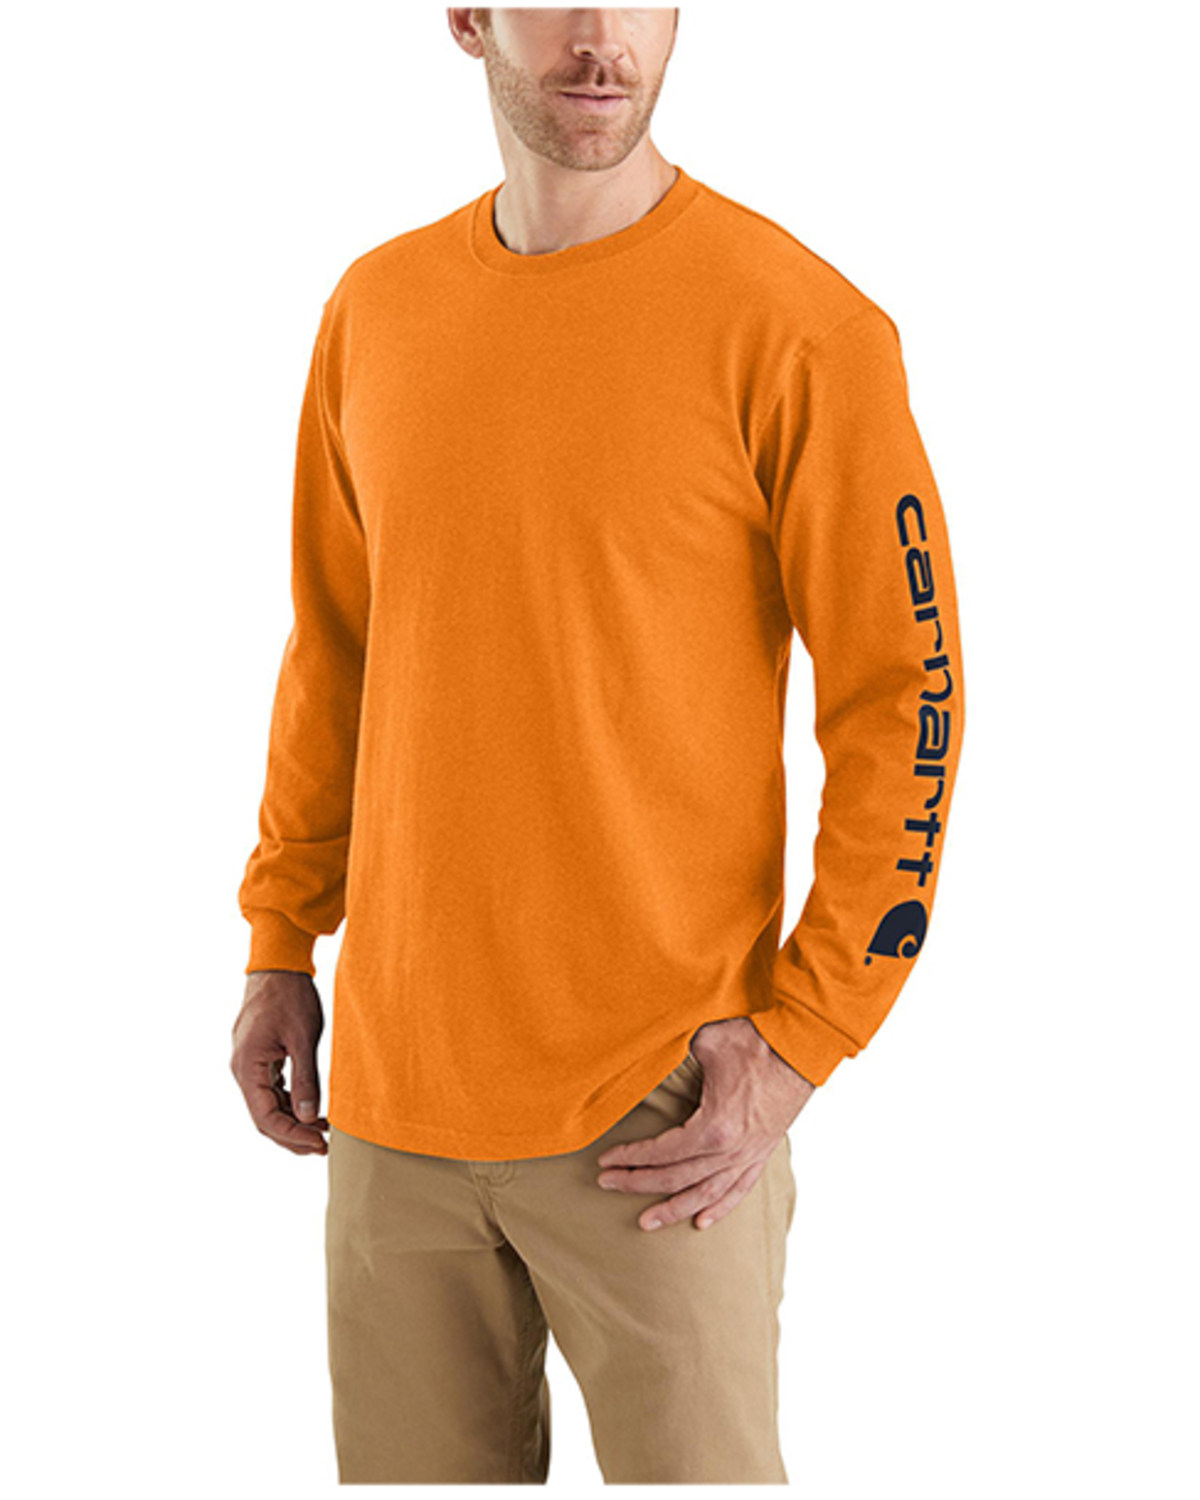 Carhartt Men's Loose Fit Heavyweight Long Sleeve Graphic Work T-Shirt